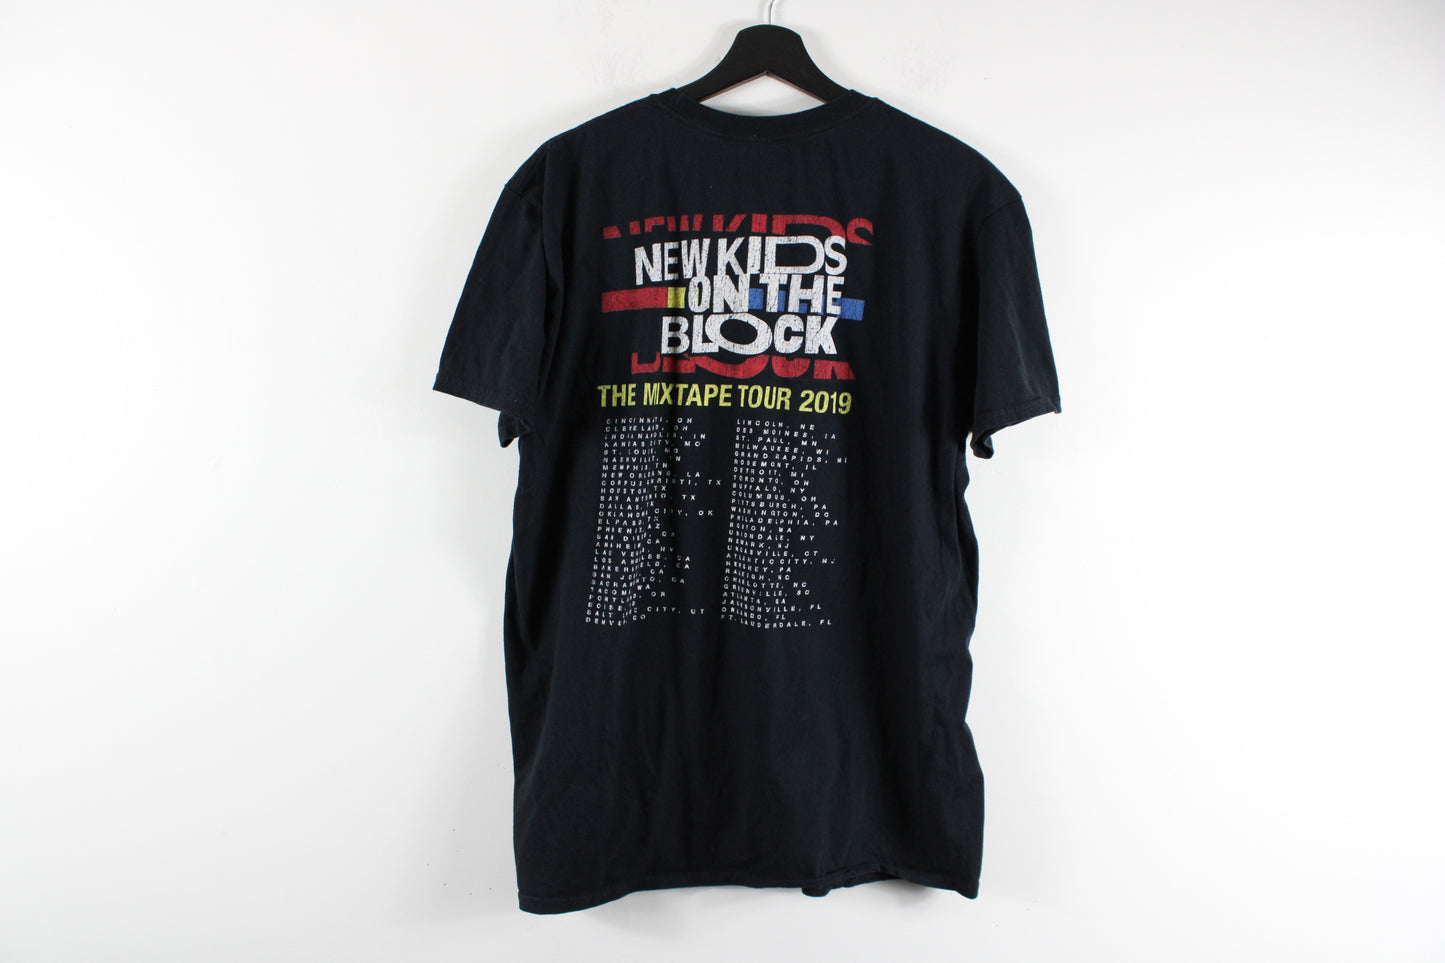 New Kids On The Block "The Mixtape Tour 2019" T-Shirt